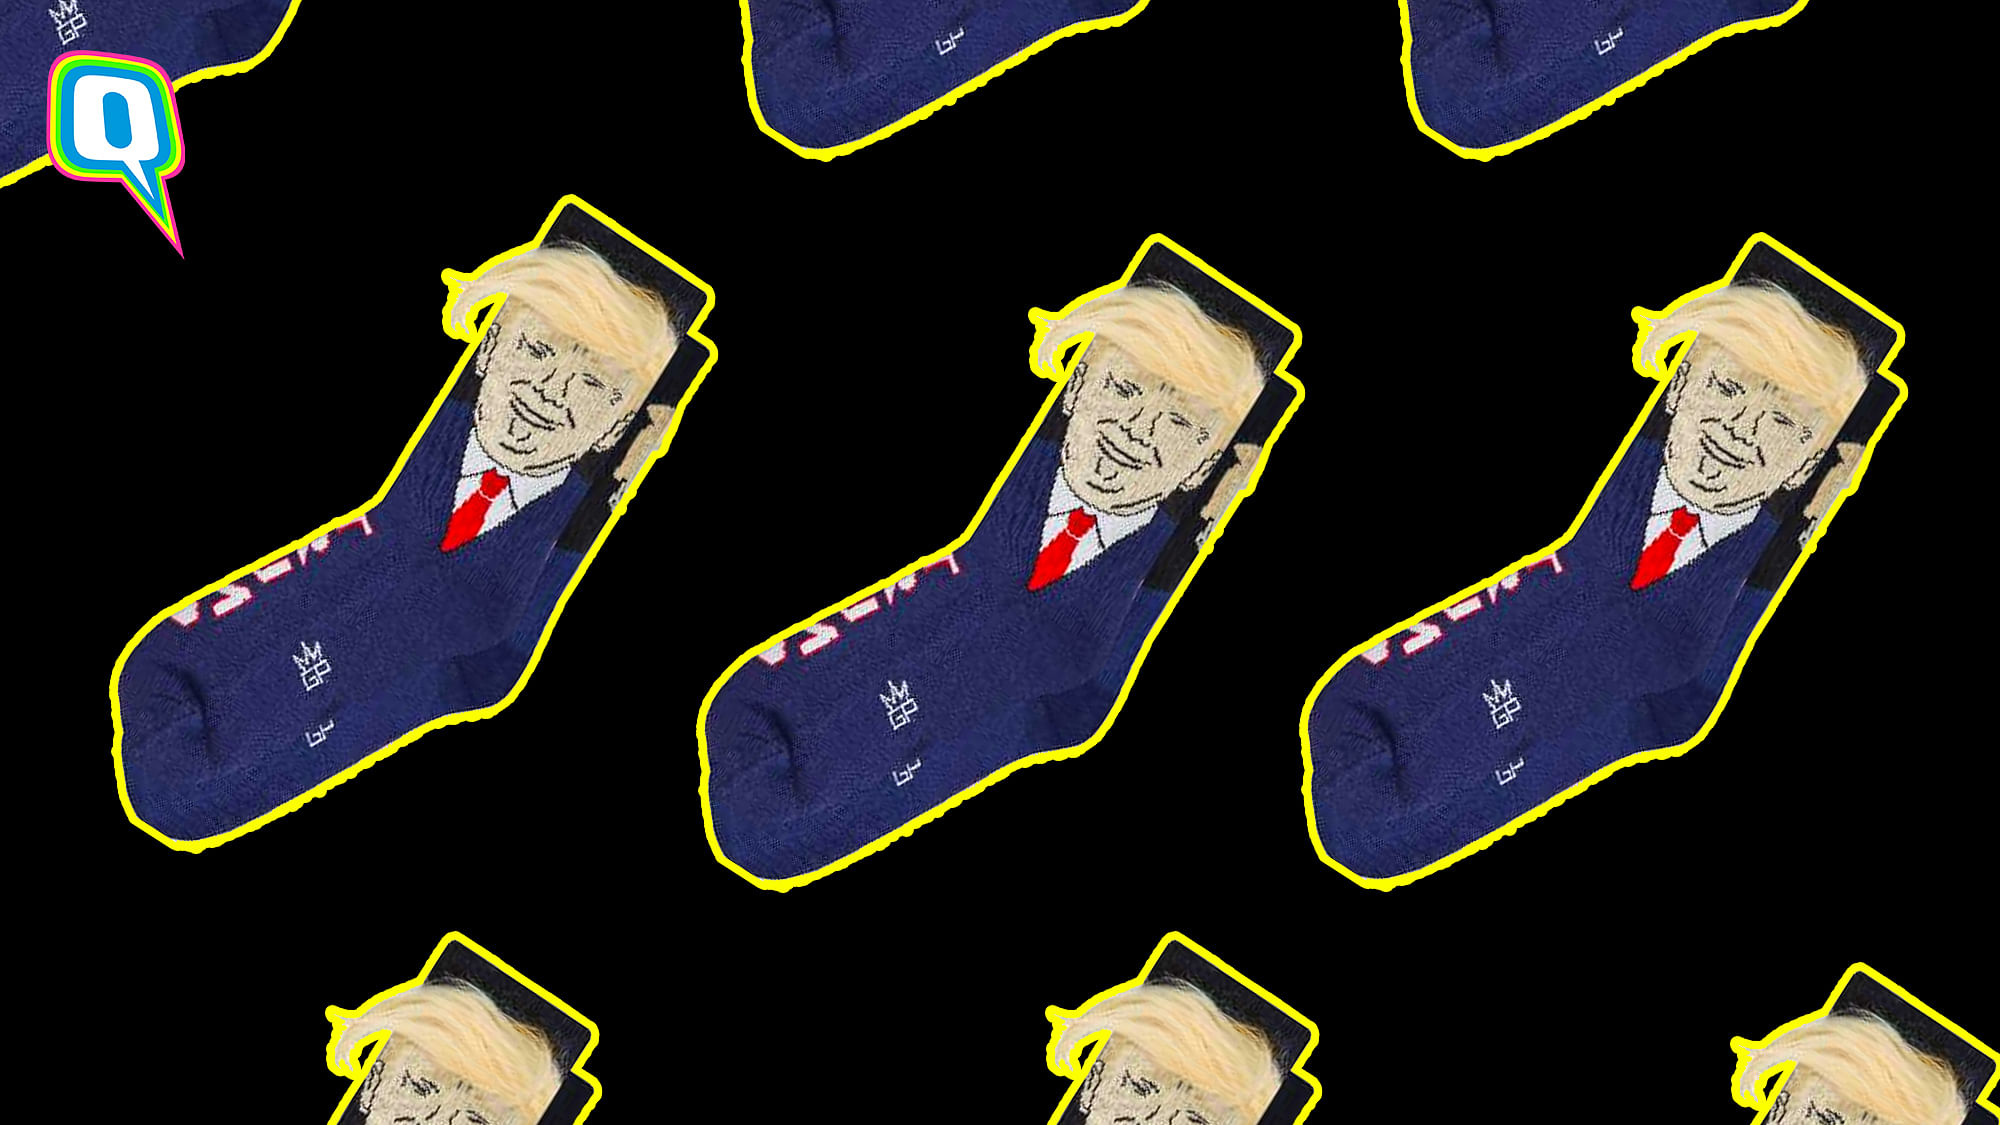 Trump socks for sale!